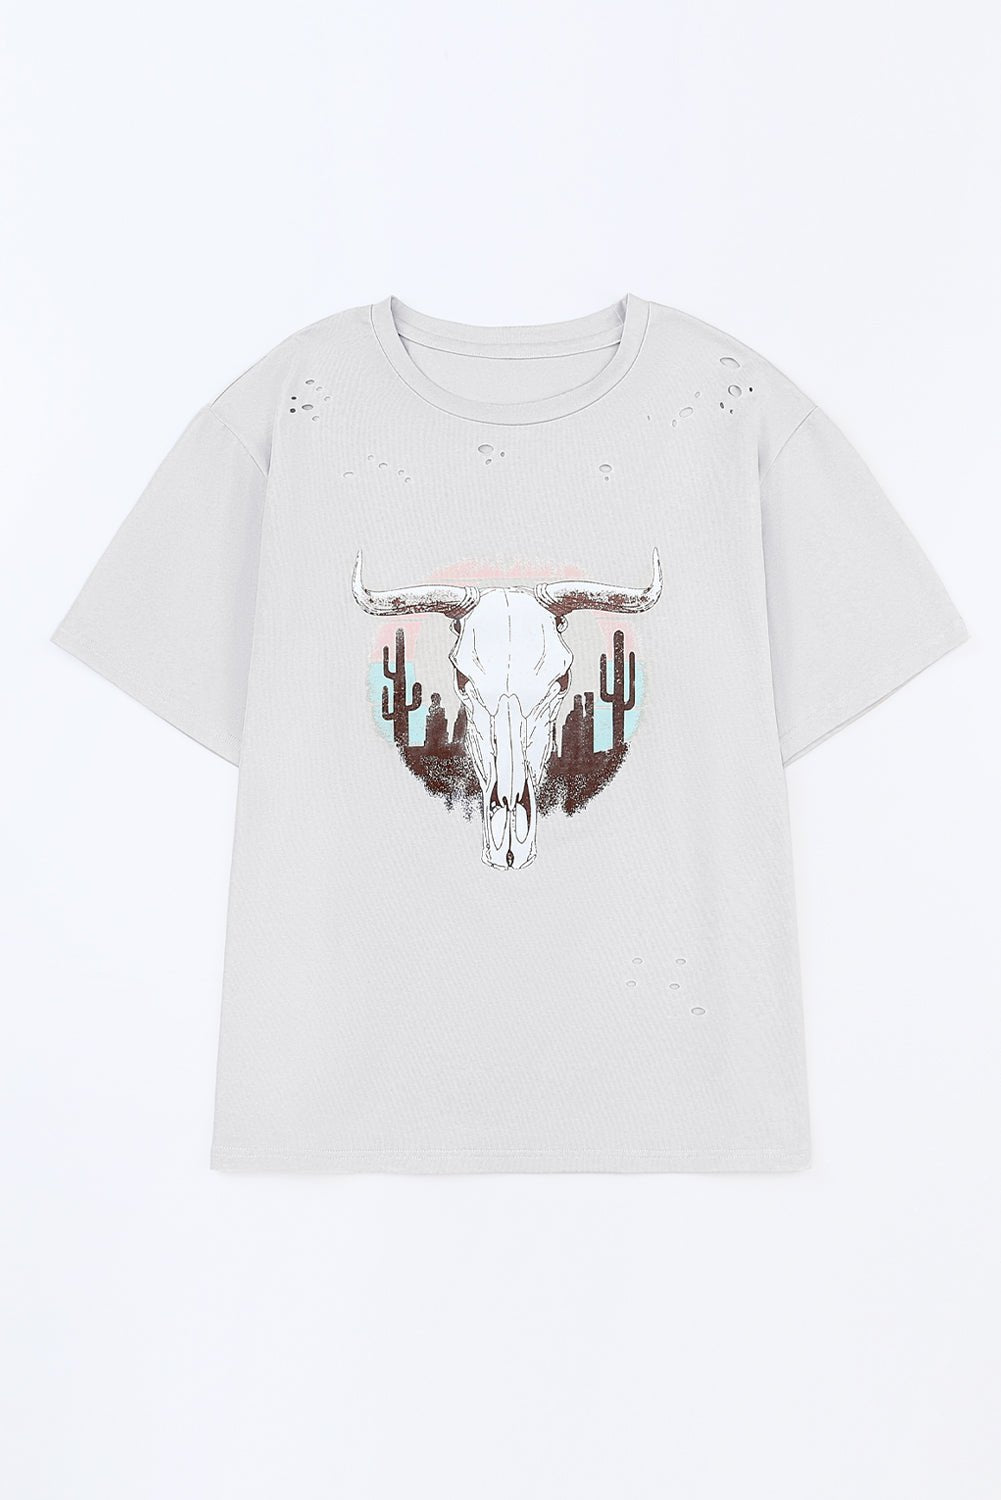 Plus Size Animal Graphic Distressed Tee Shirt - OMG! Rose